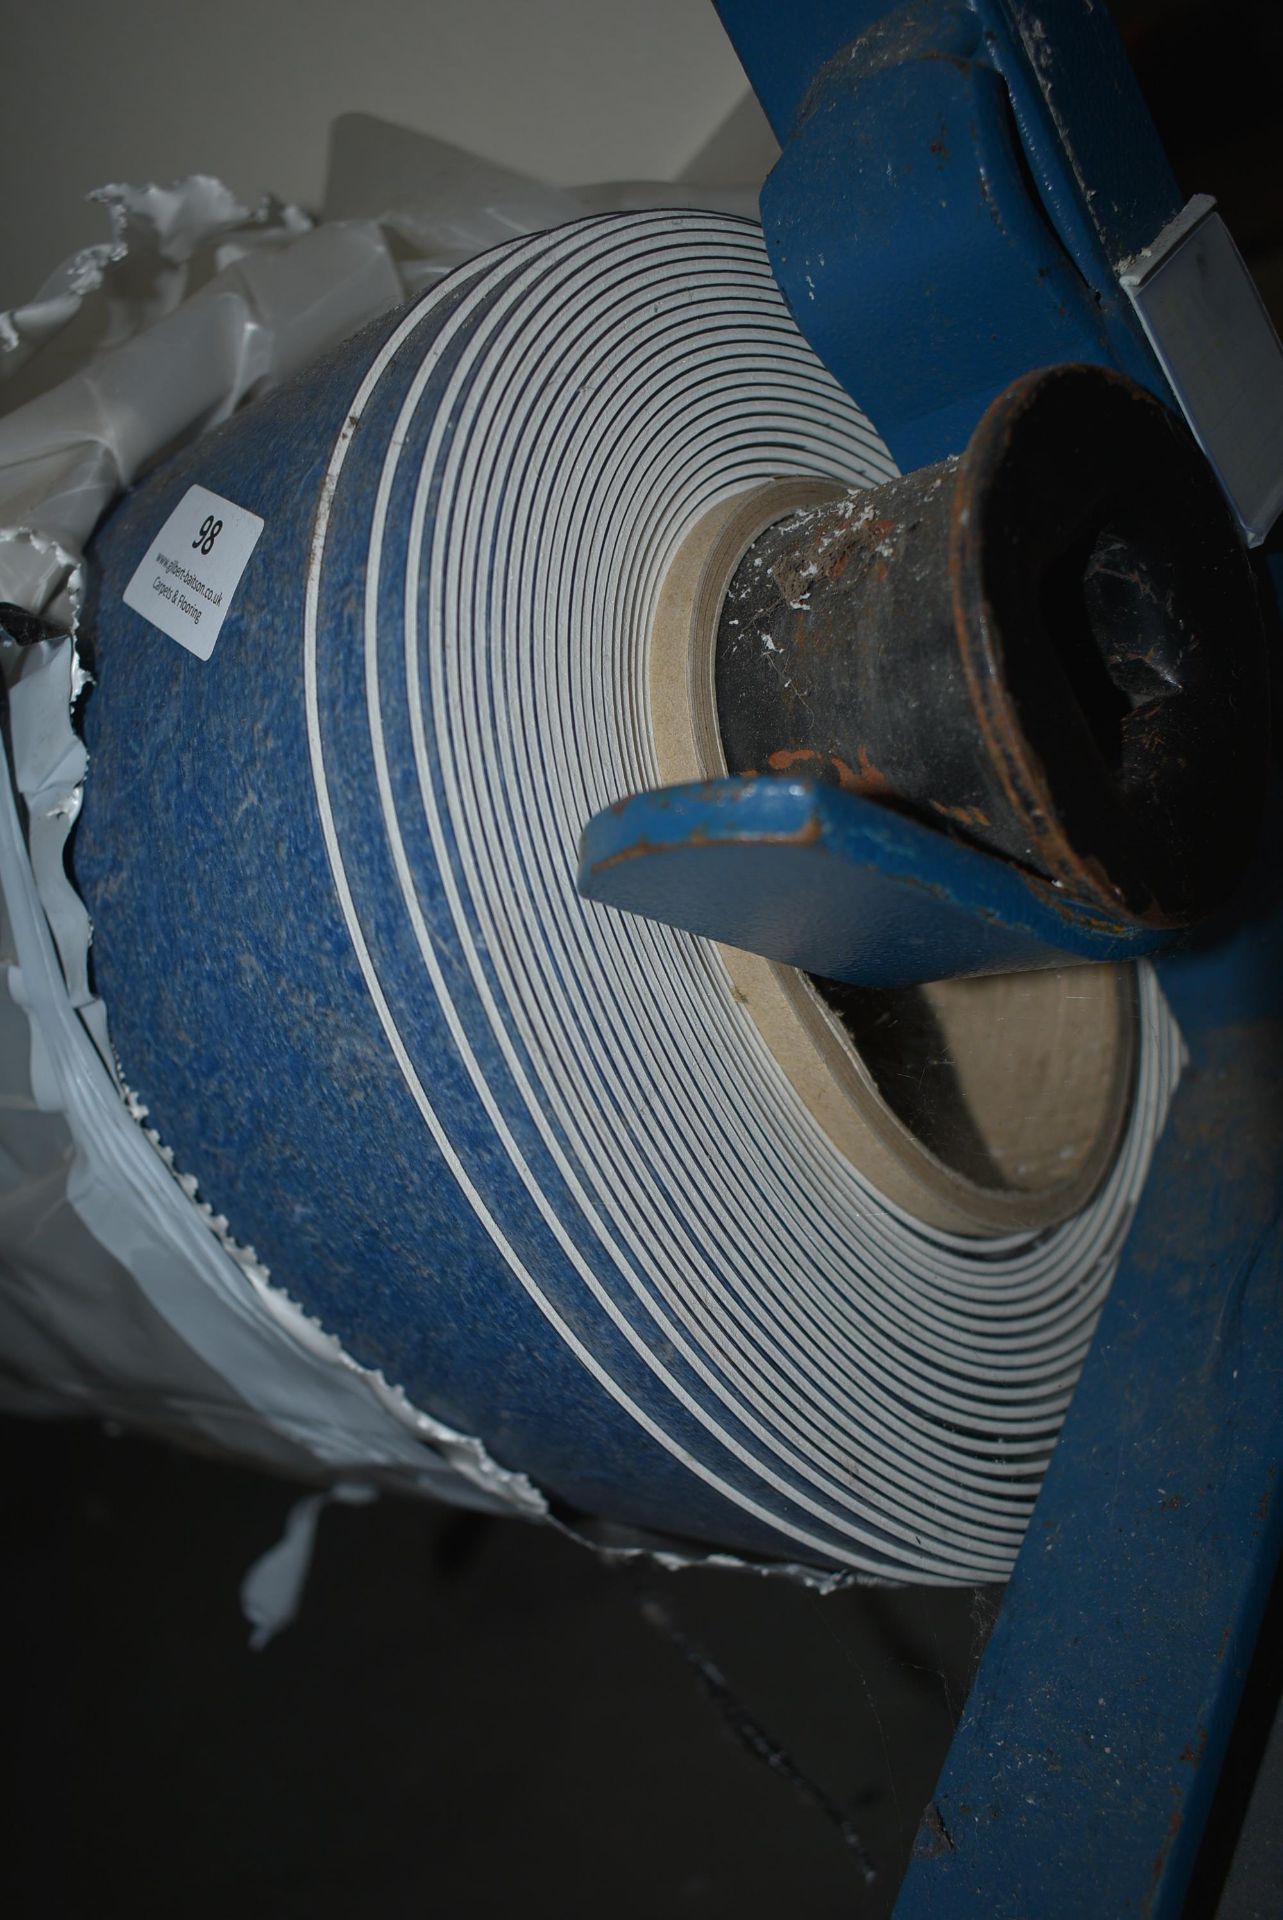 Two Assorted 3m wide Rolls of Vinyl Flooring - Image 2 of 3